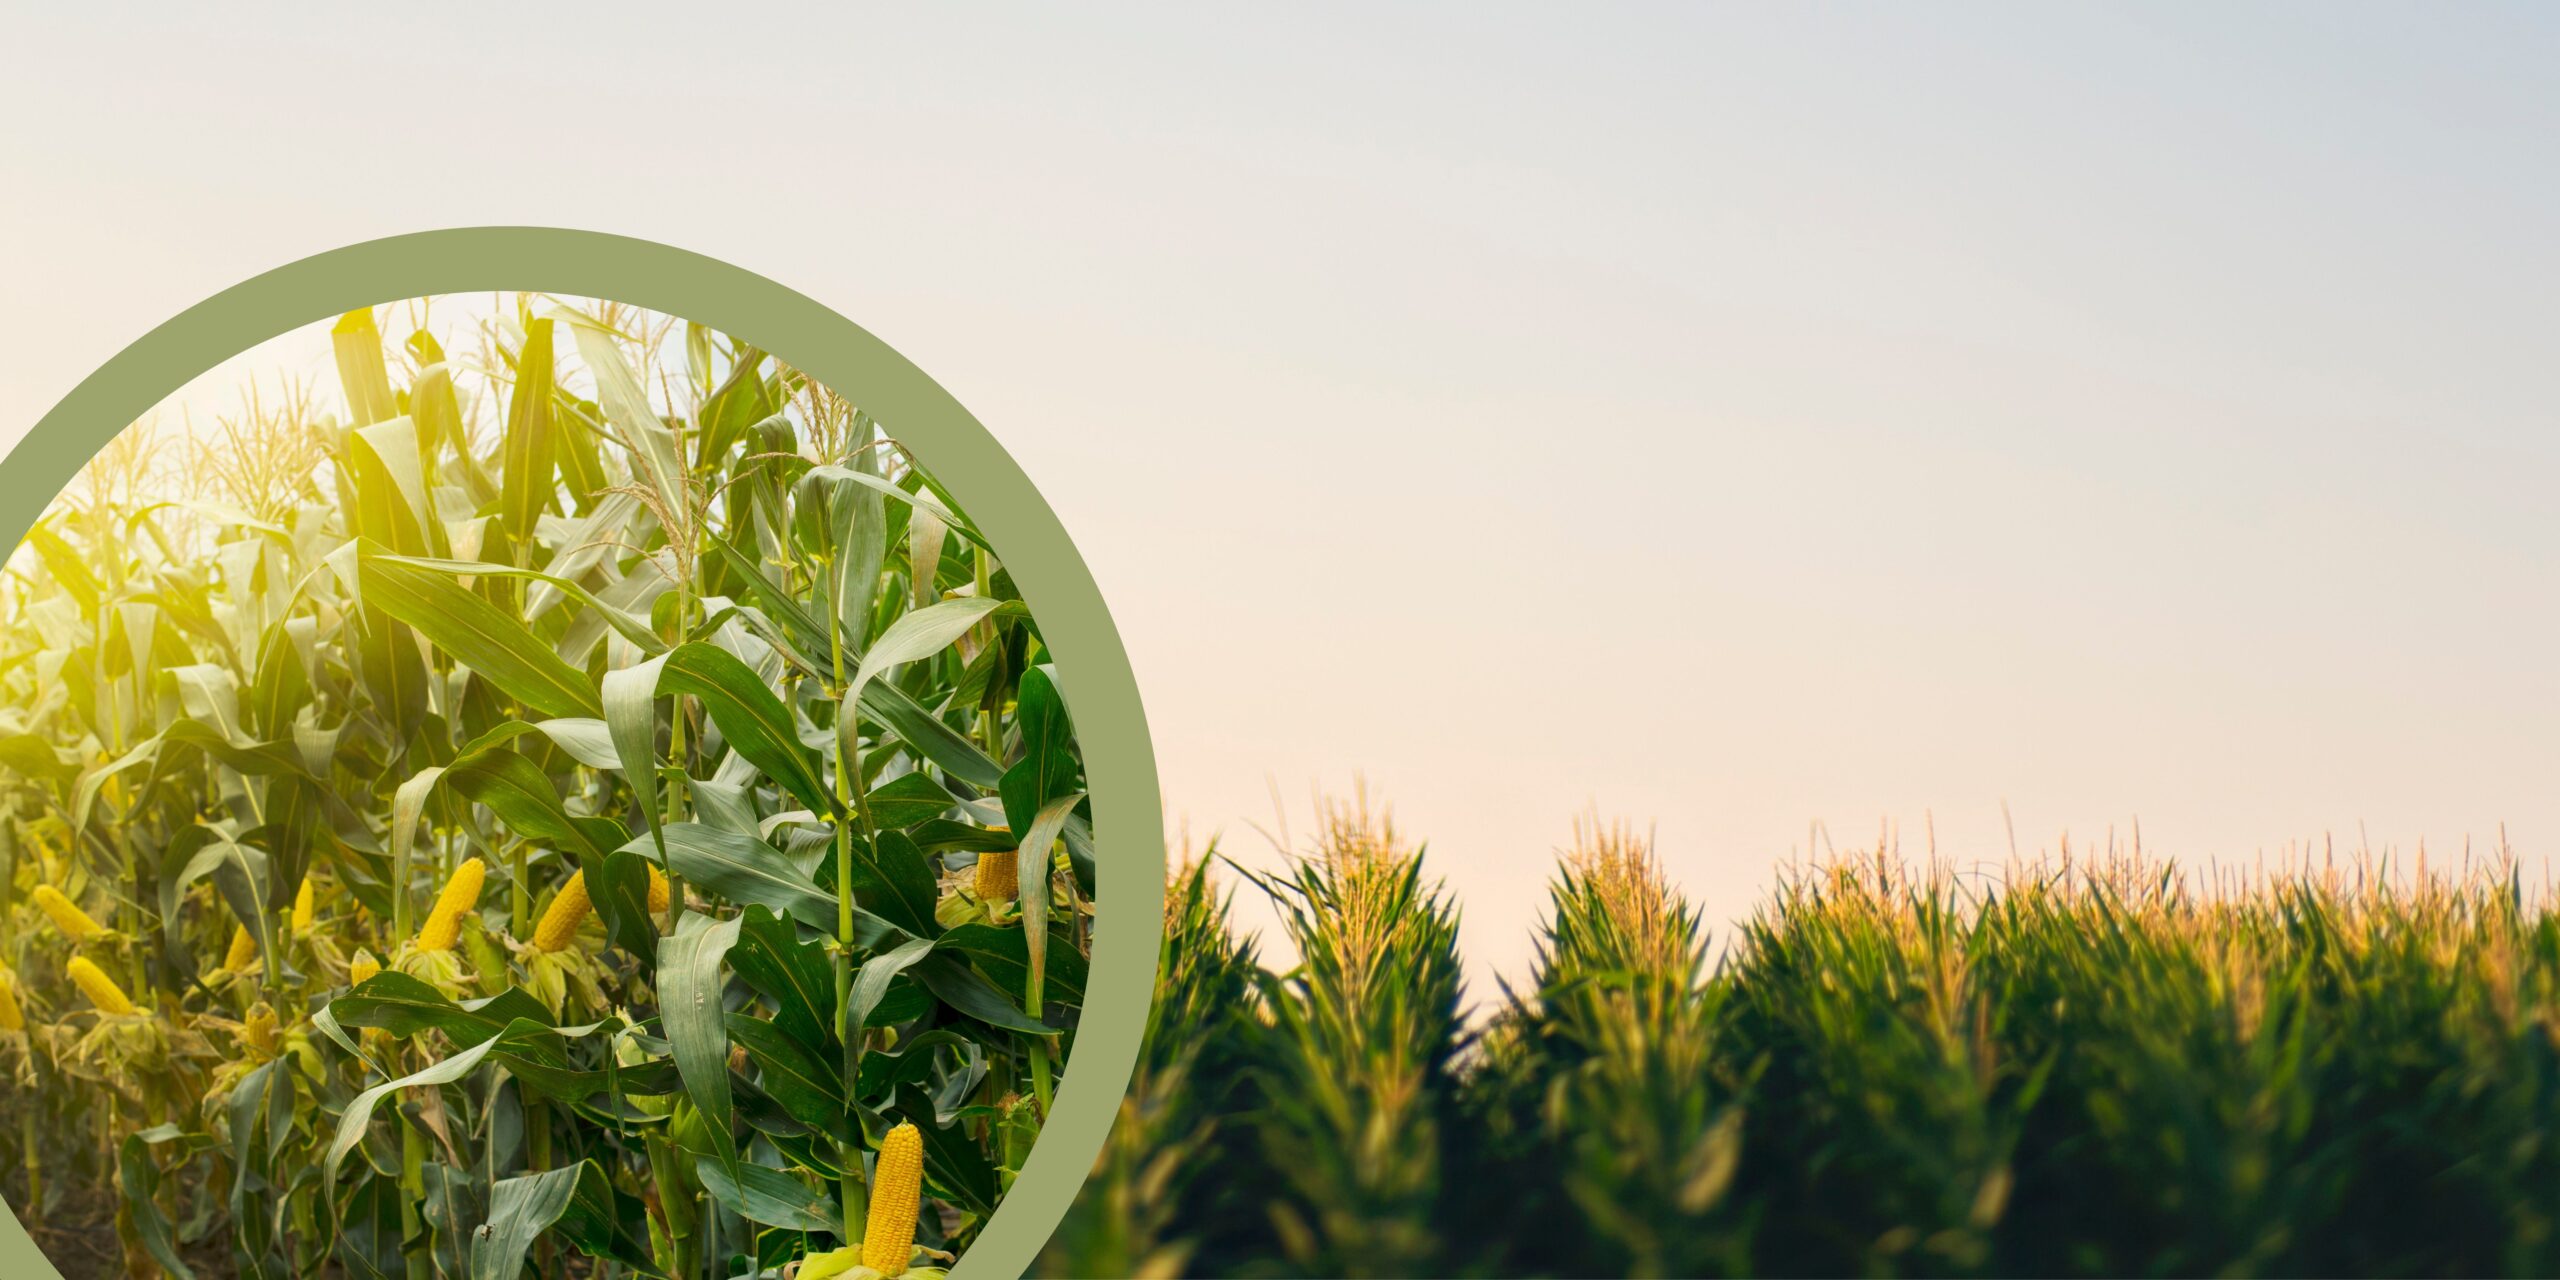 Organic farming leads to healthier environment